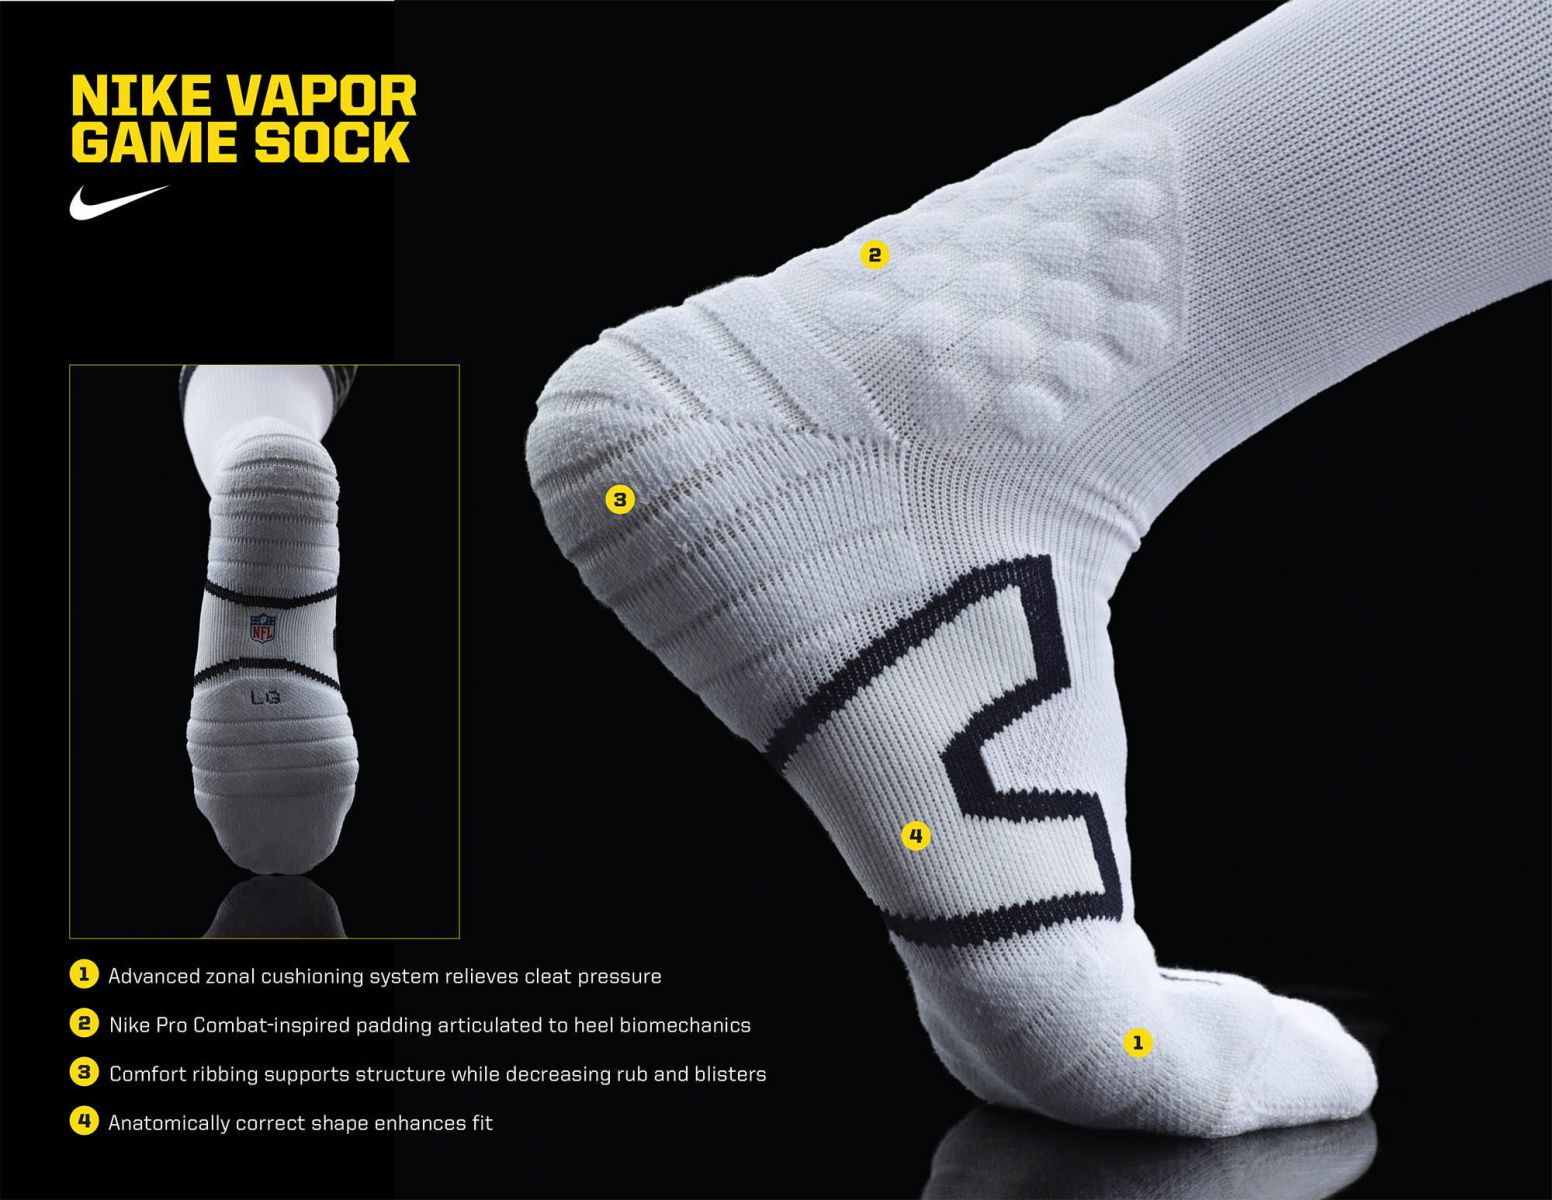 Nike NFL 2012 Vapor Game Sock Tech Sheet